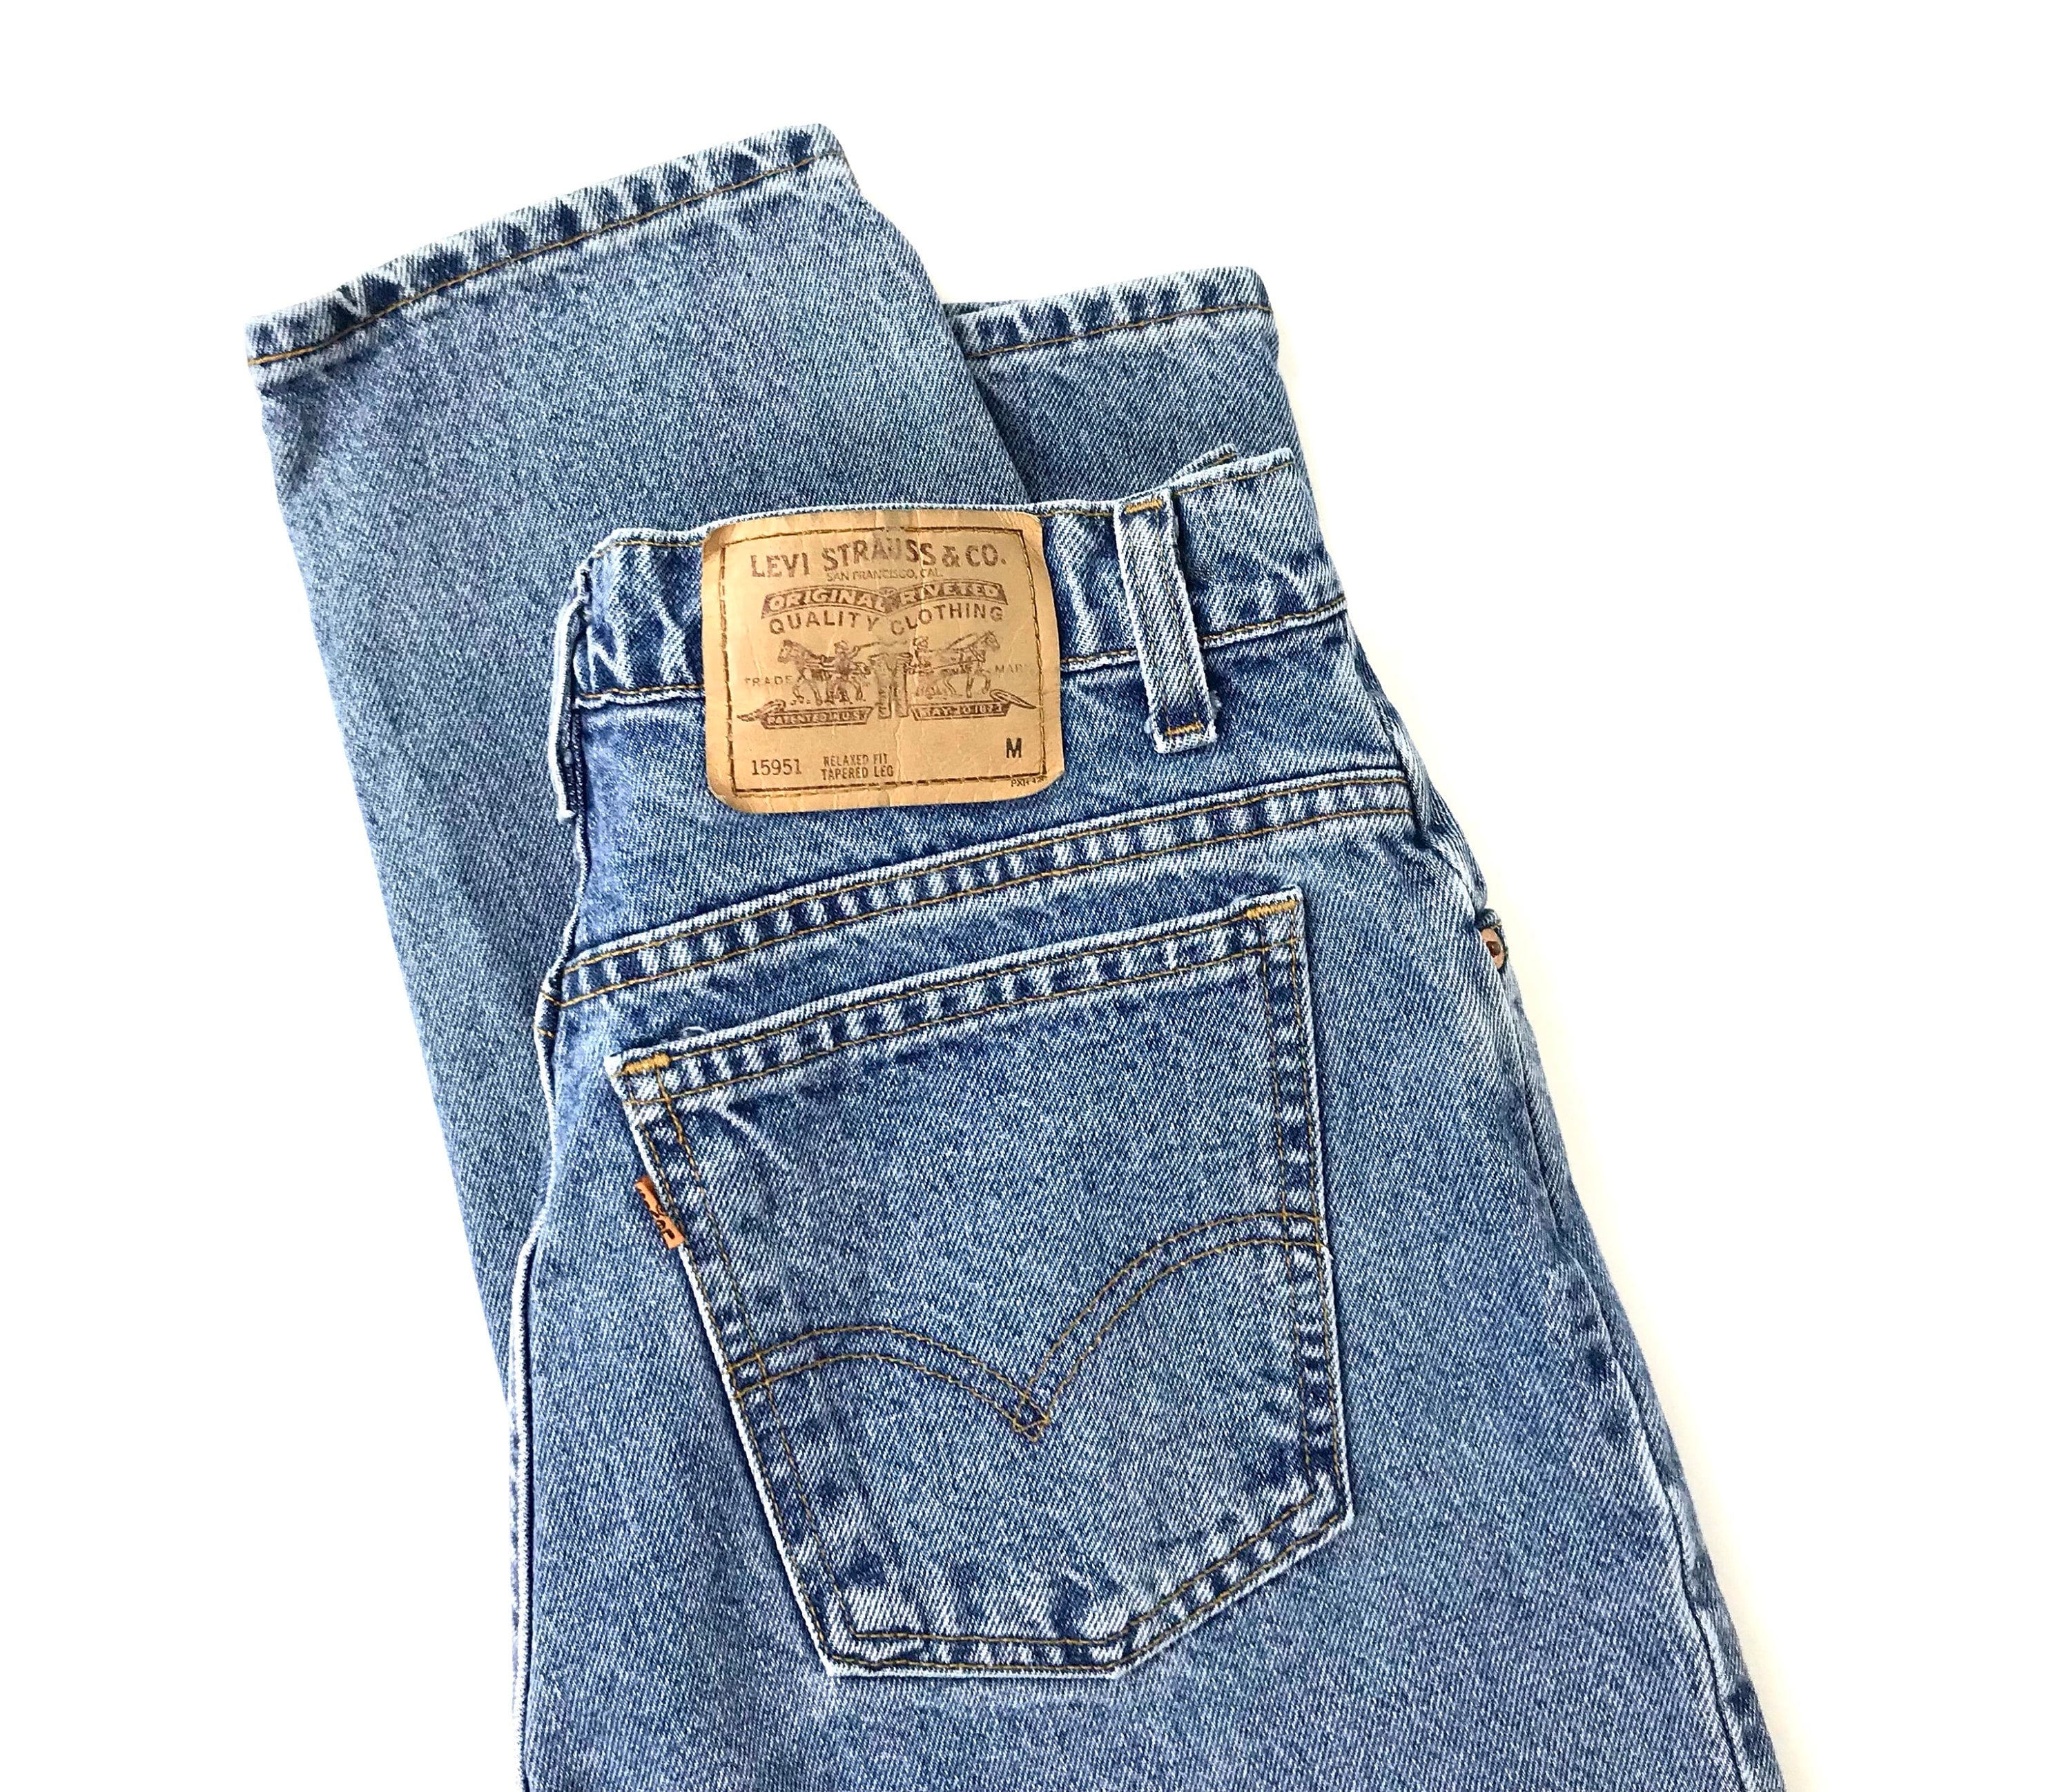 Levi's 951 Orange Tab Jeans / Size 29 30